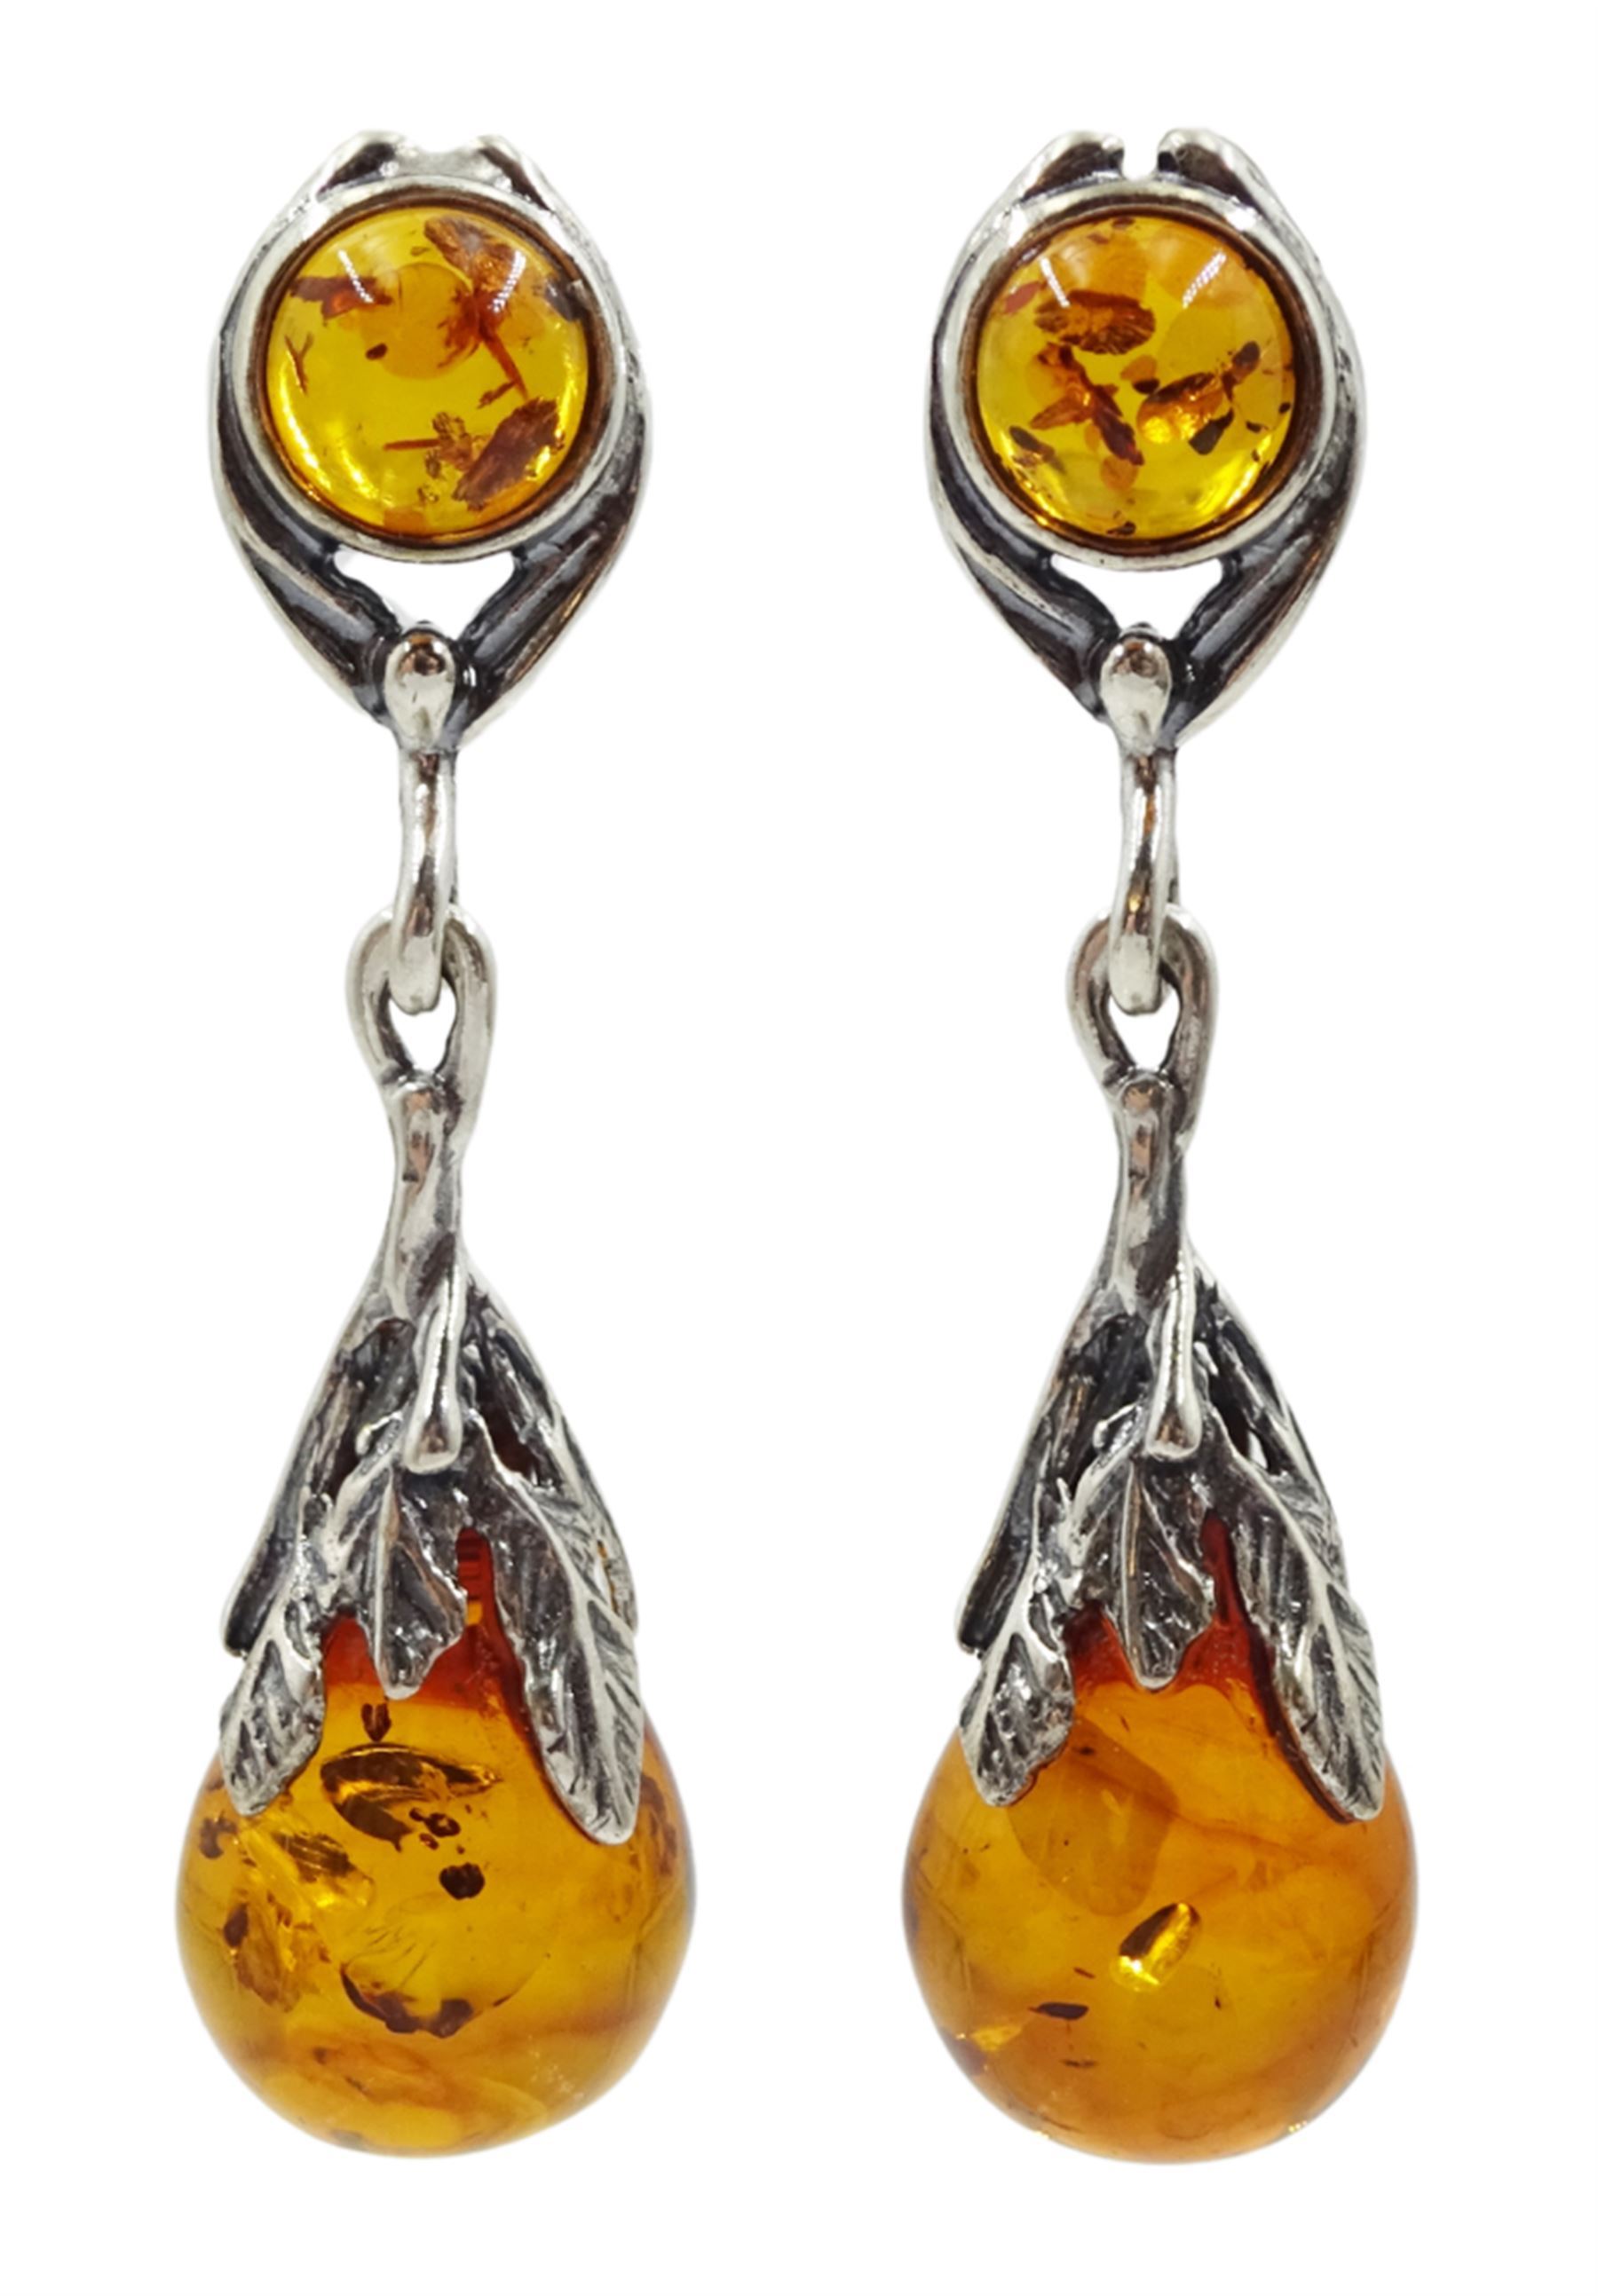 Pair of silver Baltic amber pendant stud earrings